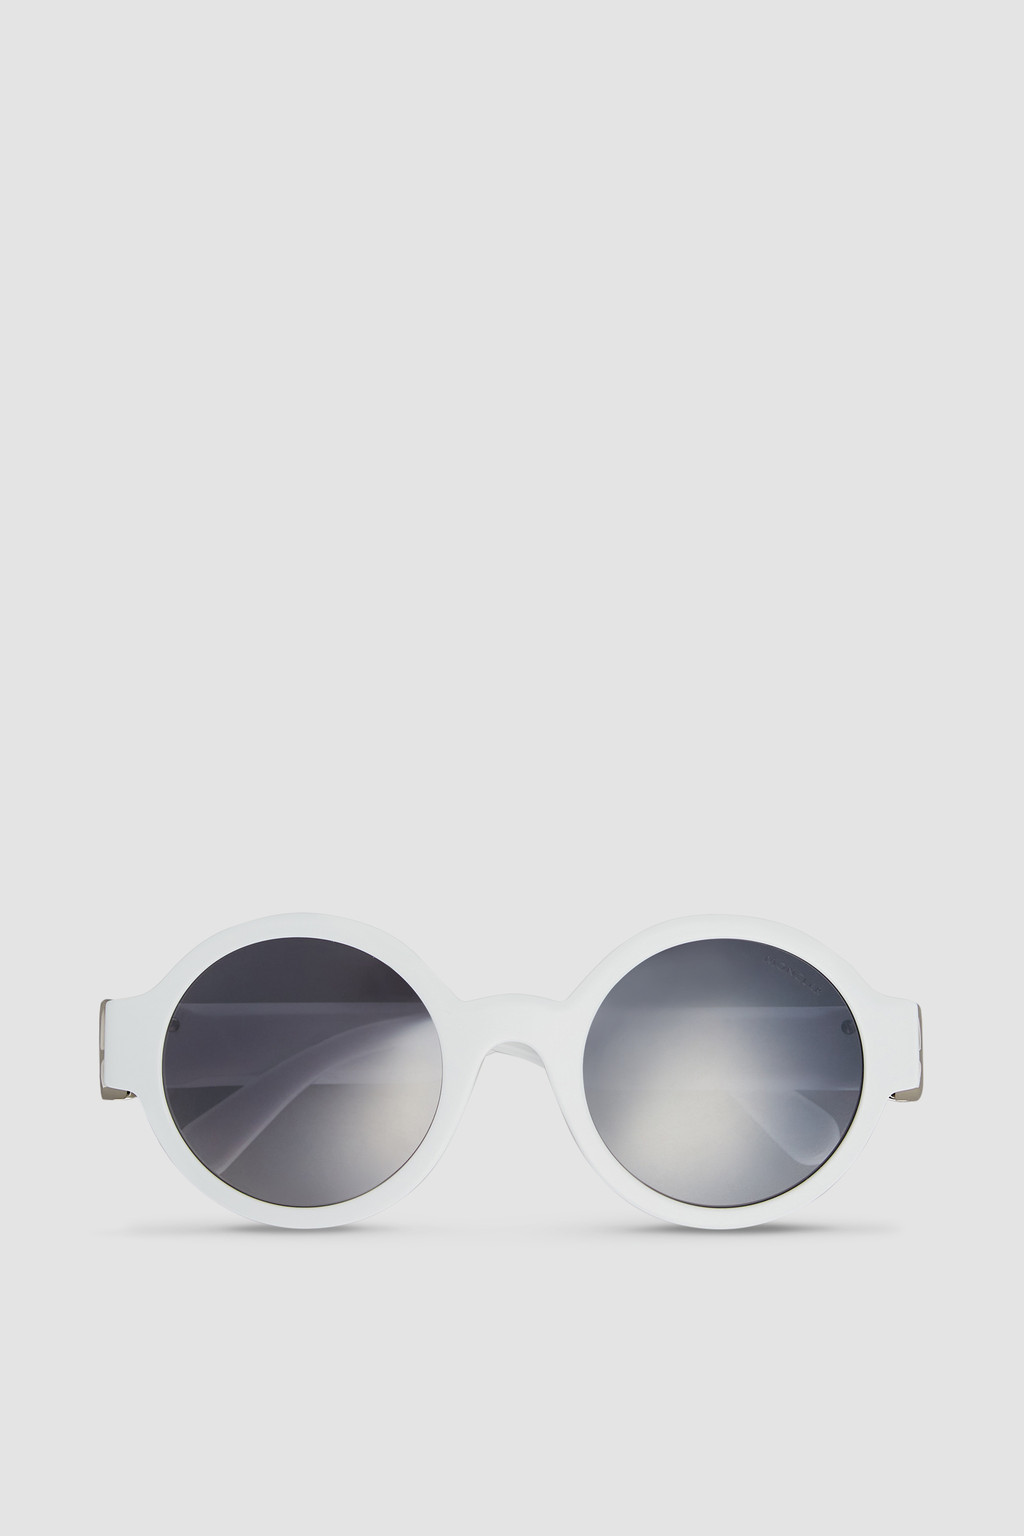 Outta Love White Marble Women's Oval Sunglasses | Le Specs